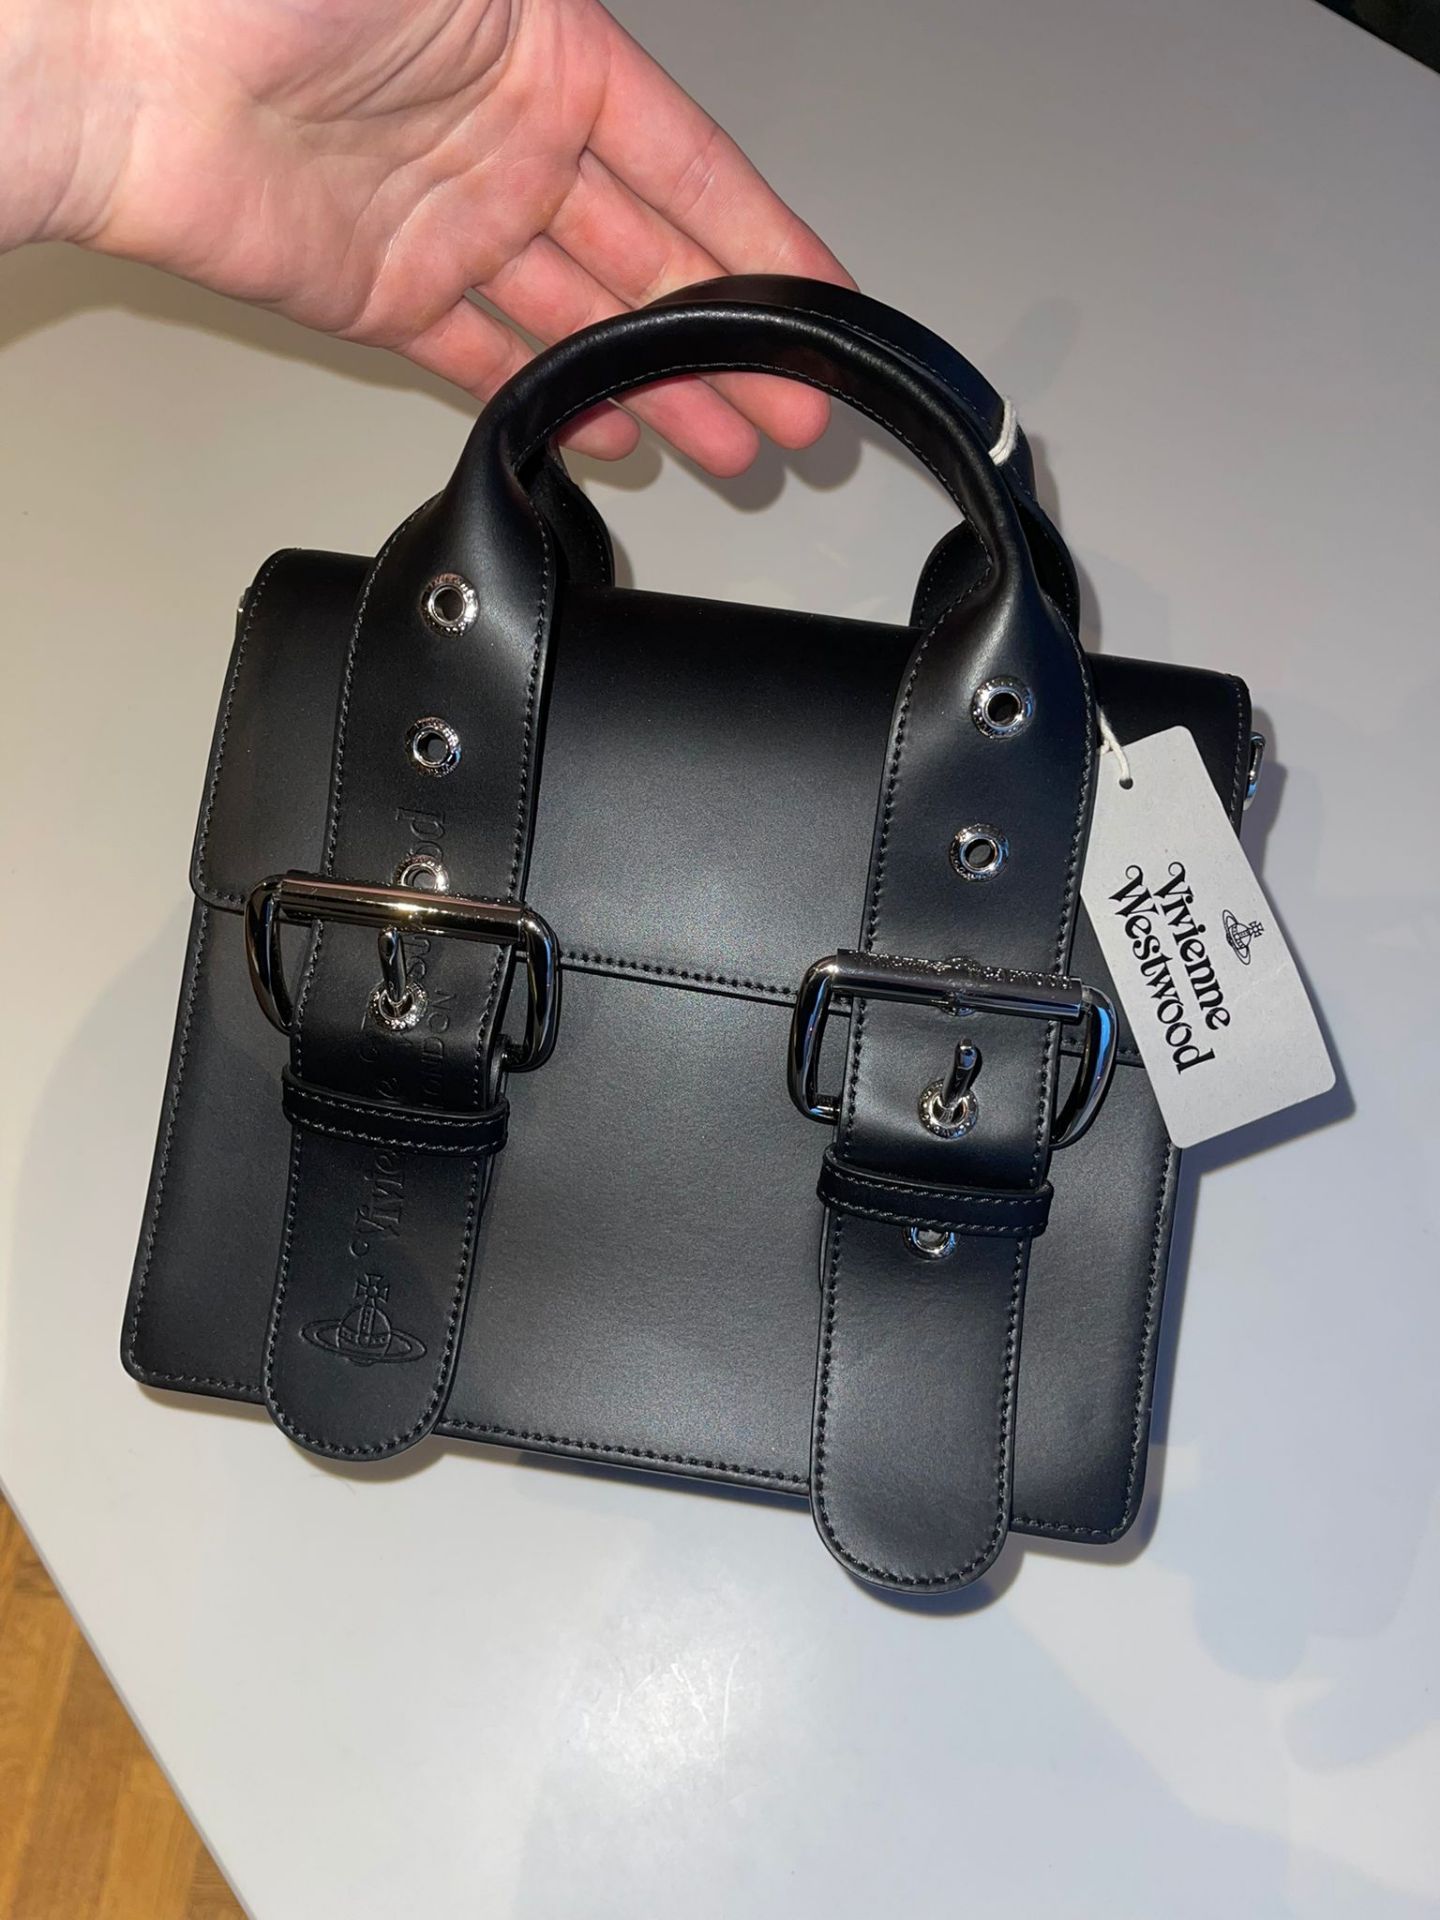 Vivenne Westwood Satchel Handbag Black Leather Gloss Effect, RRP £515.00